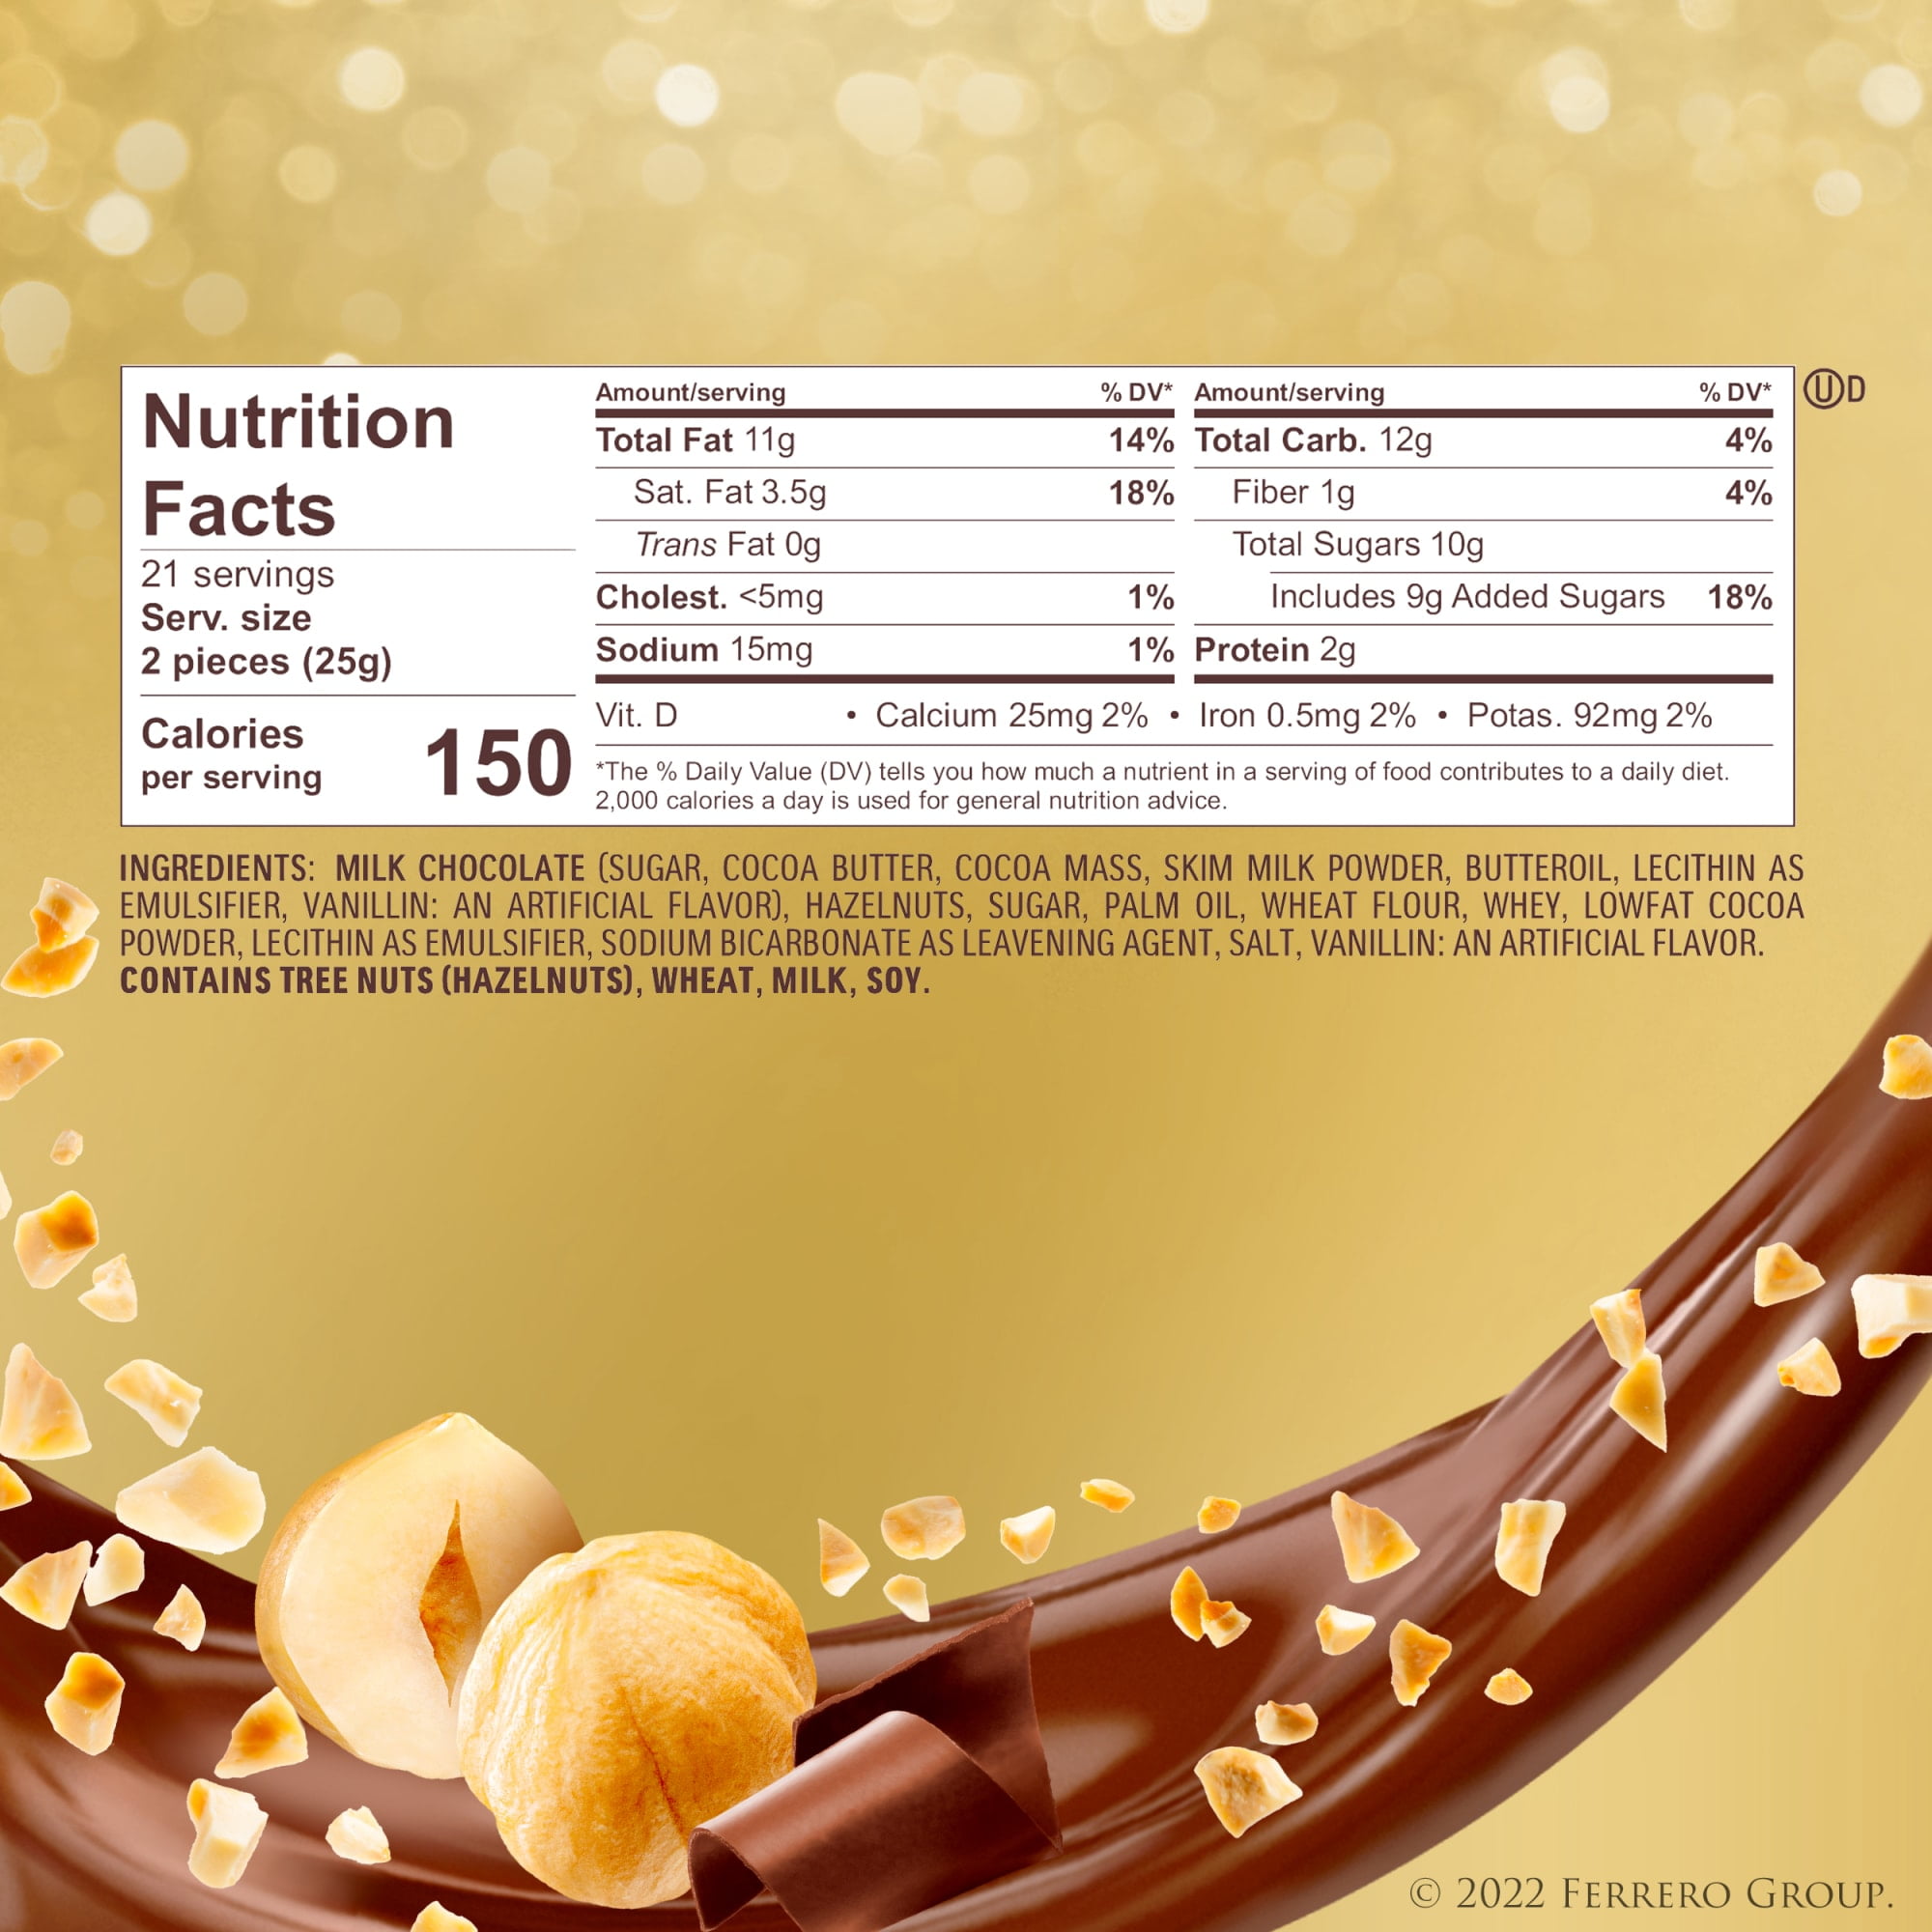 Ferrero Rocher, 42 Count, Gourmet Milk Chocolate Hazelnut, Valentine's  Chocolate, Individually Wrapped, 18.5 oz